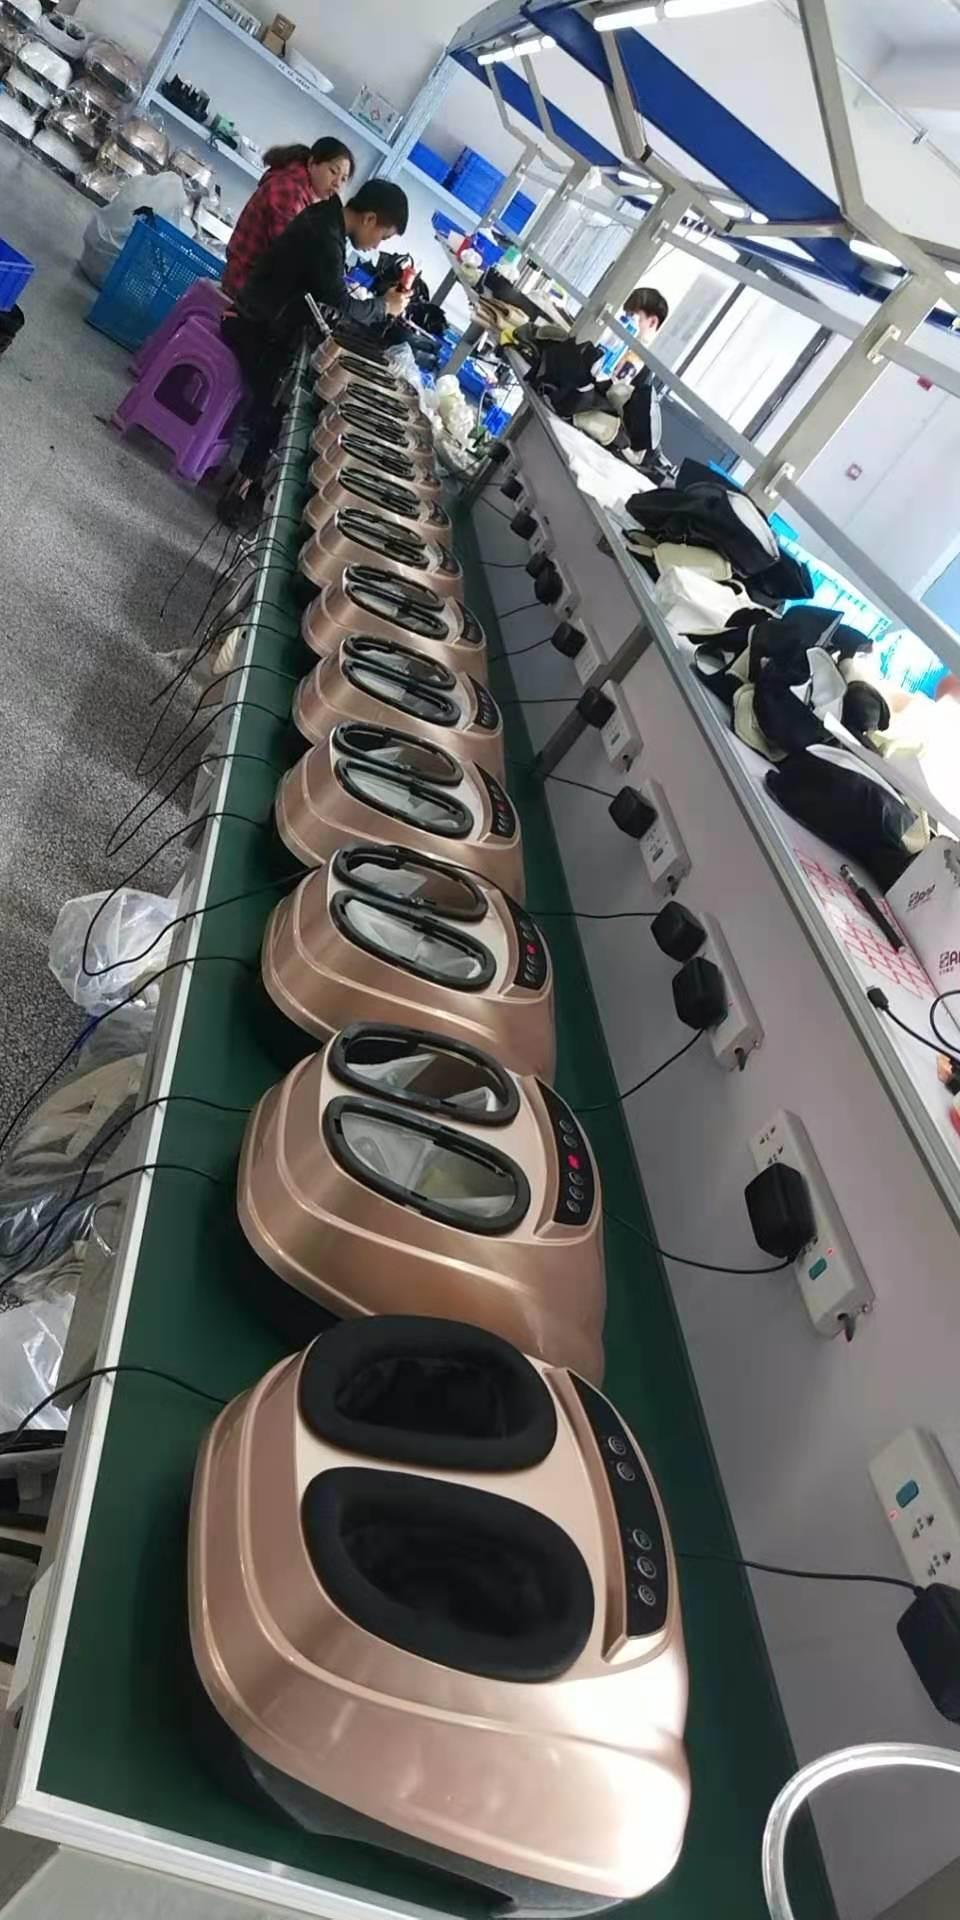 China Mechanical Tahath Carton 16.8 X 15.3 9.8 Inches; 10.65 Pounds Foot Bath Massager Machine